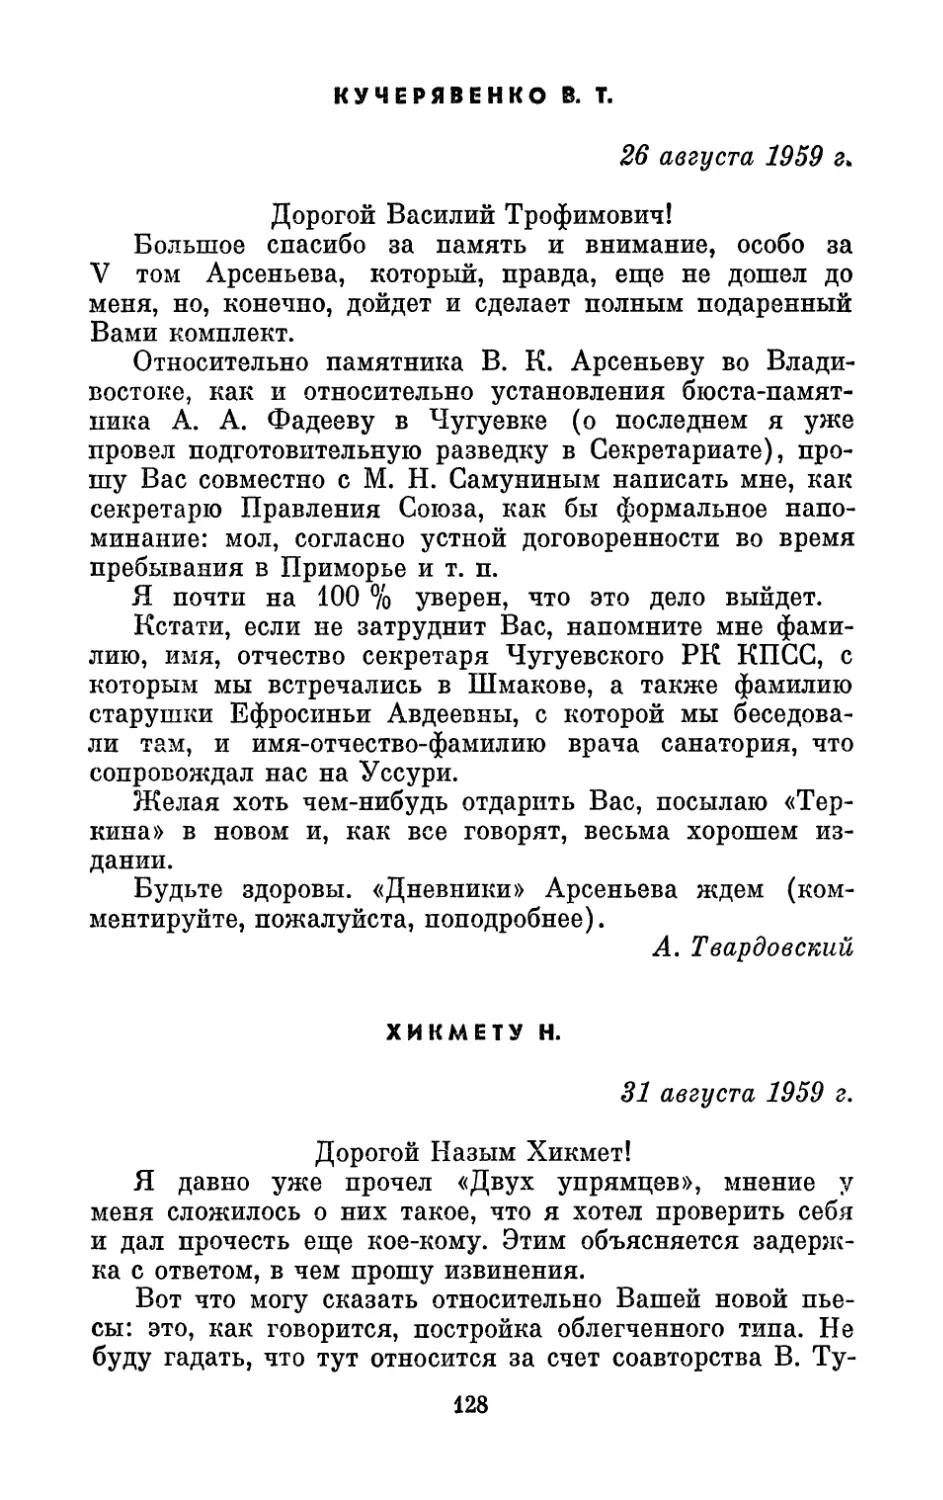 Кучерявенко В. Т., 26 августа 1959 г.
Хикмету Н., 31 августа 1959 г.